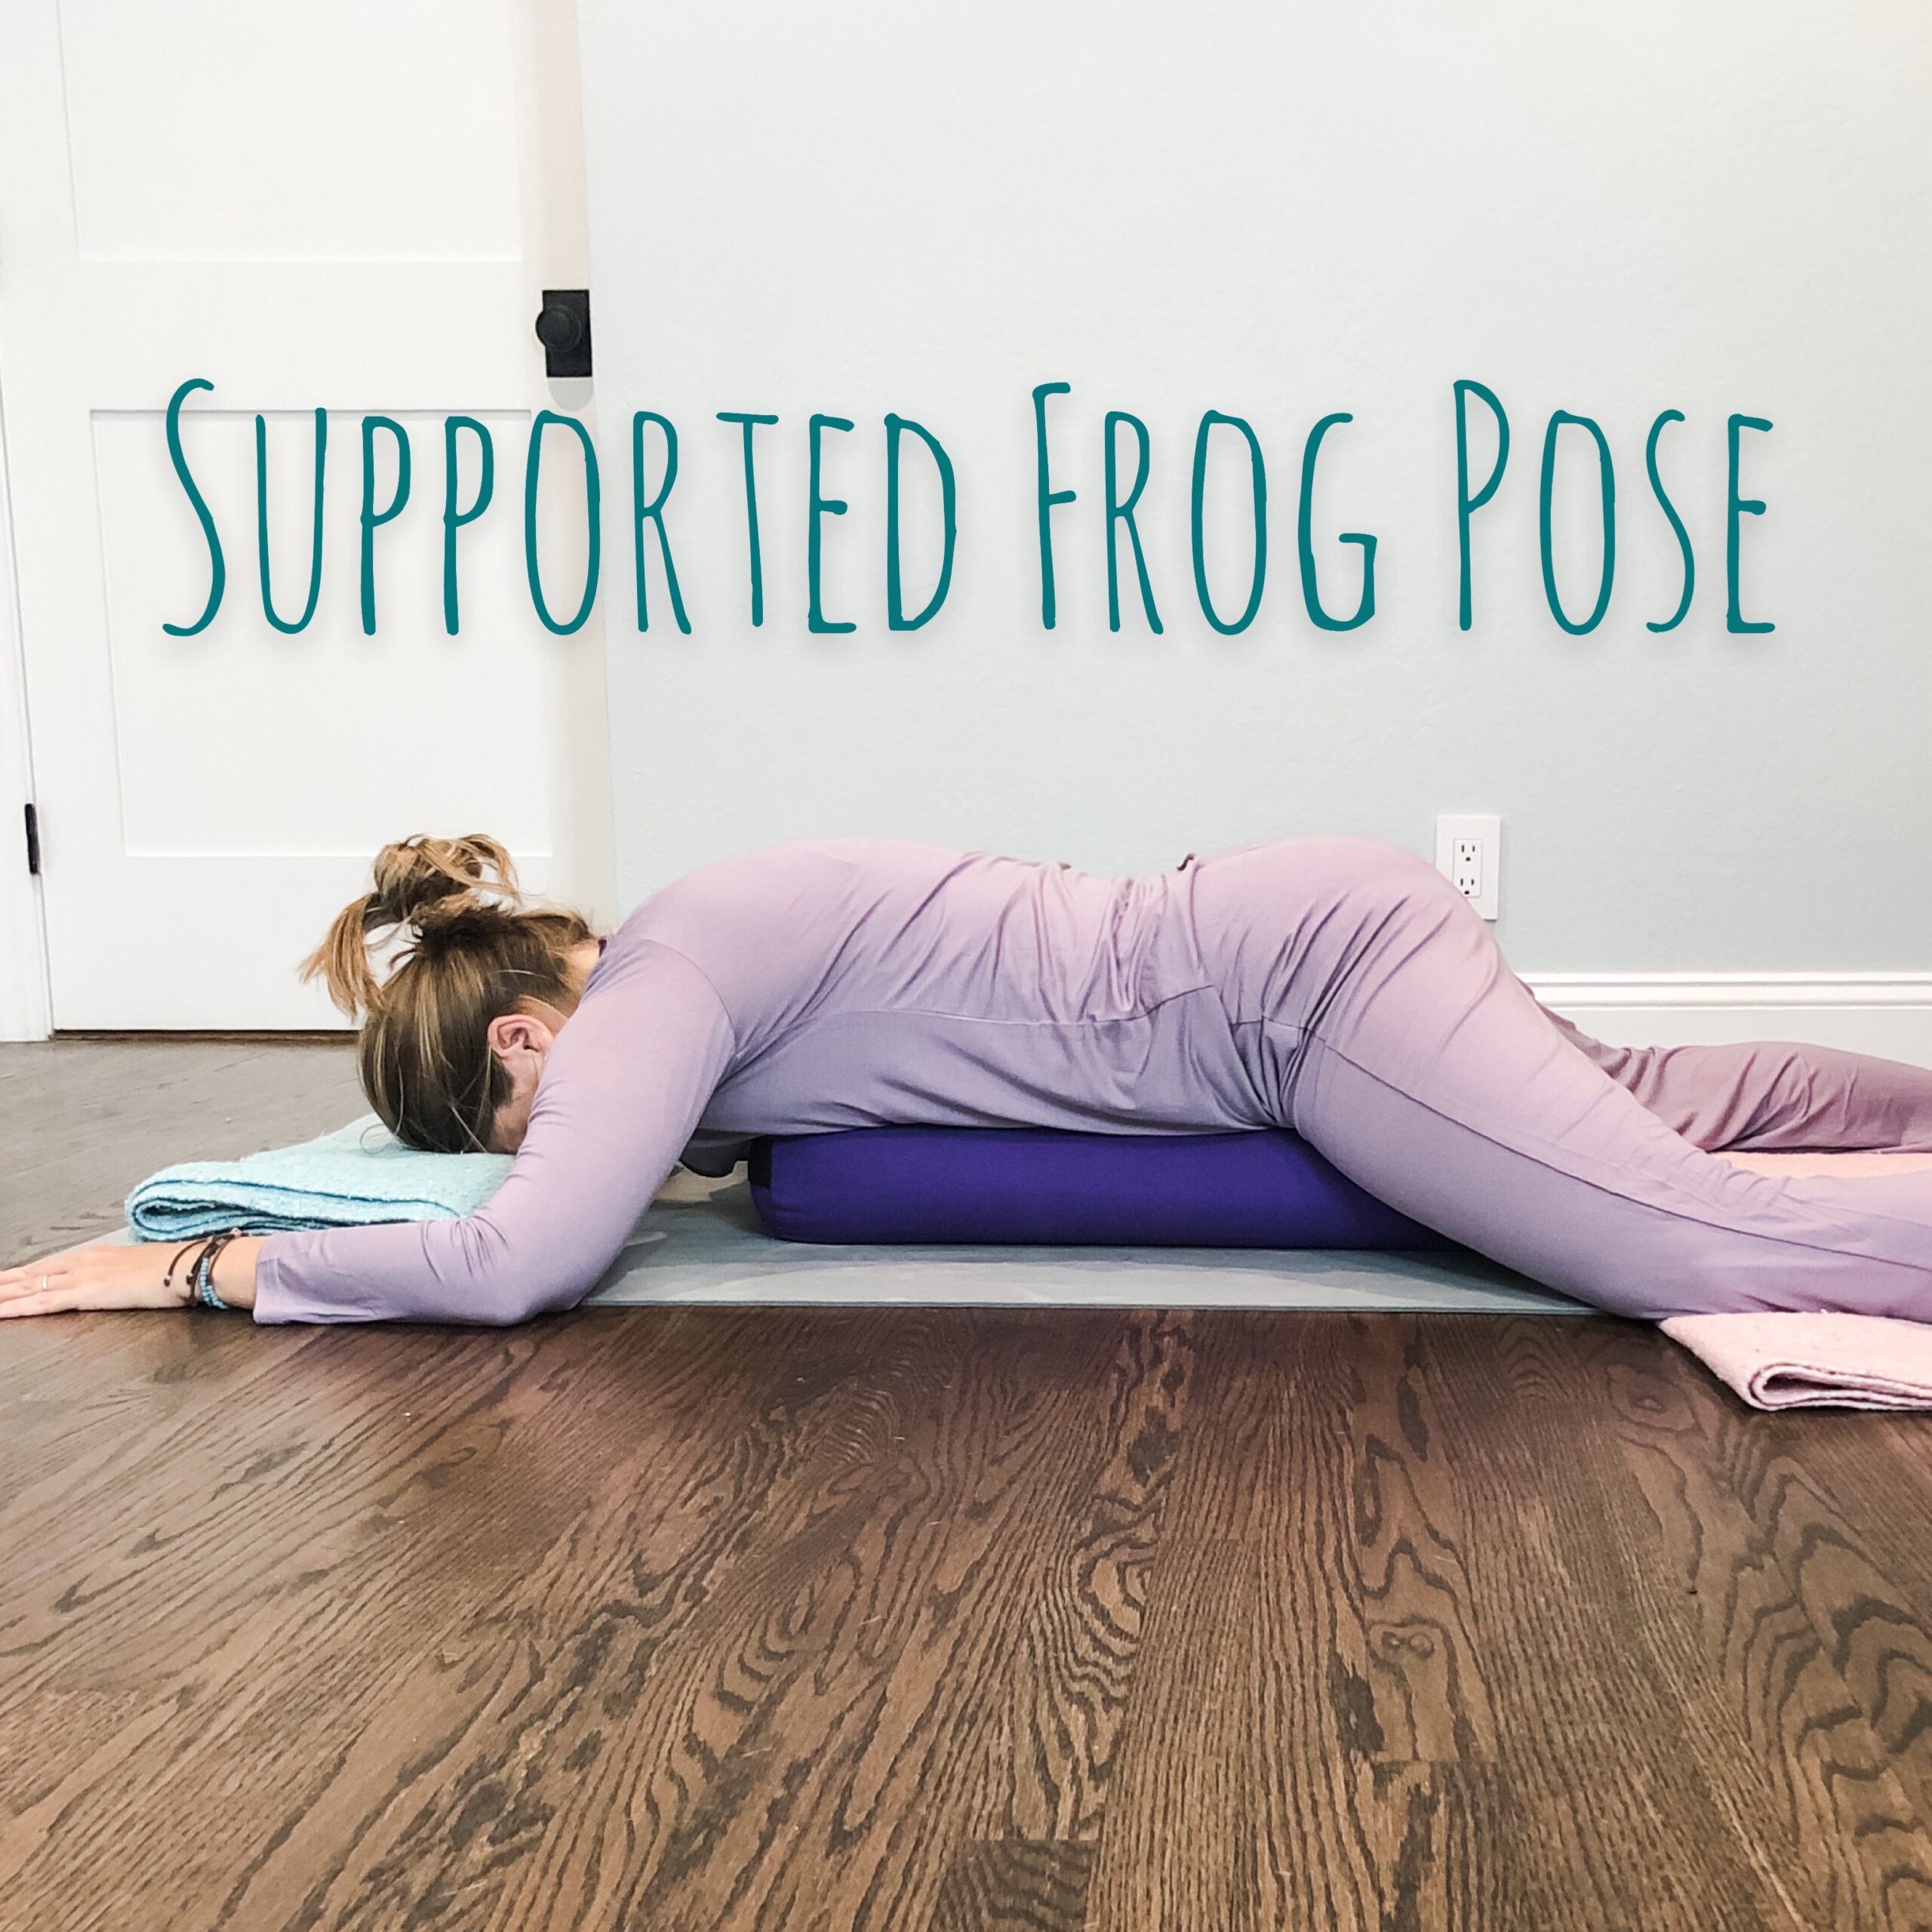 frog pose